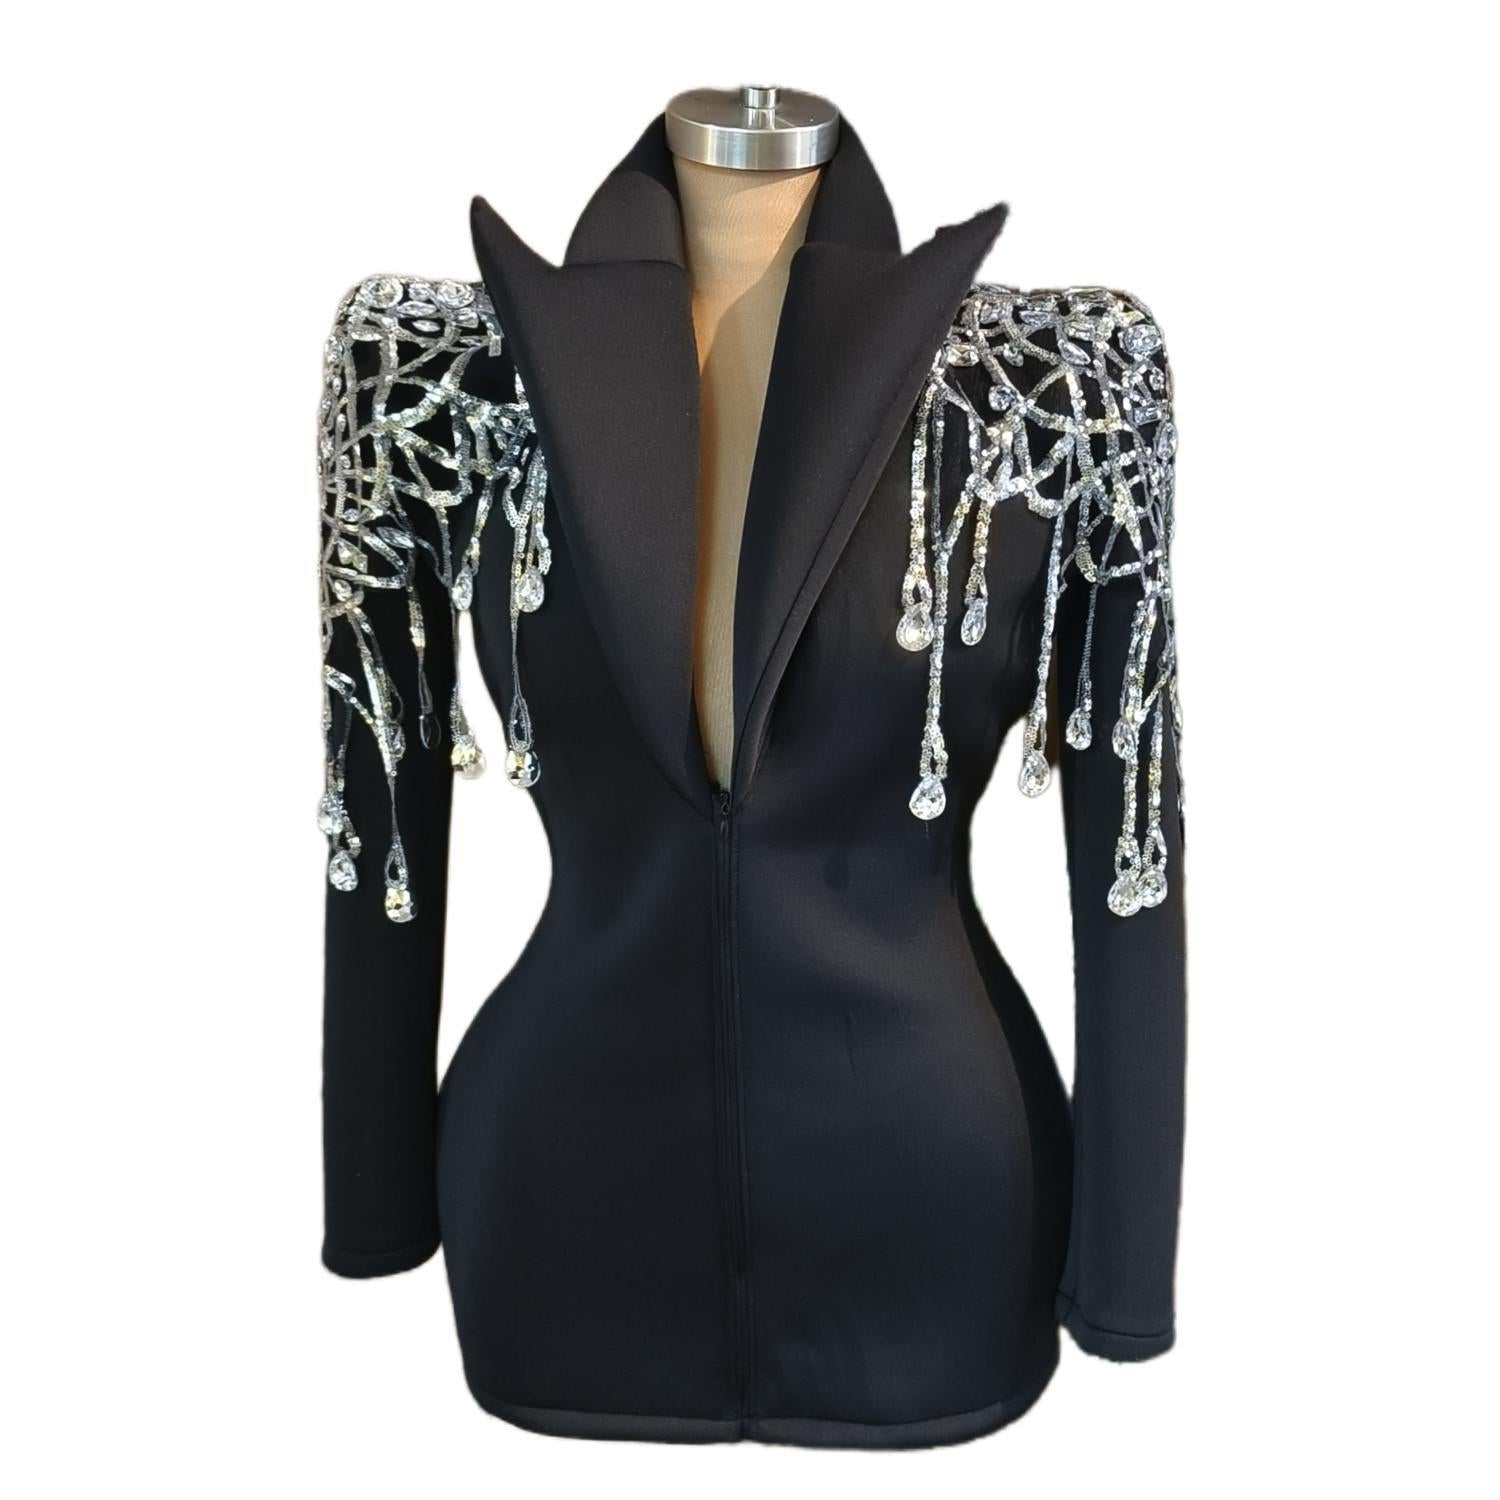 Sparkly Rhinestones Exaggerated Sleeves Black Jacket Sexy Singer Dancer Nightclub Jazz Dance Costume Performance Show Wear